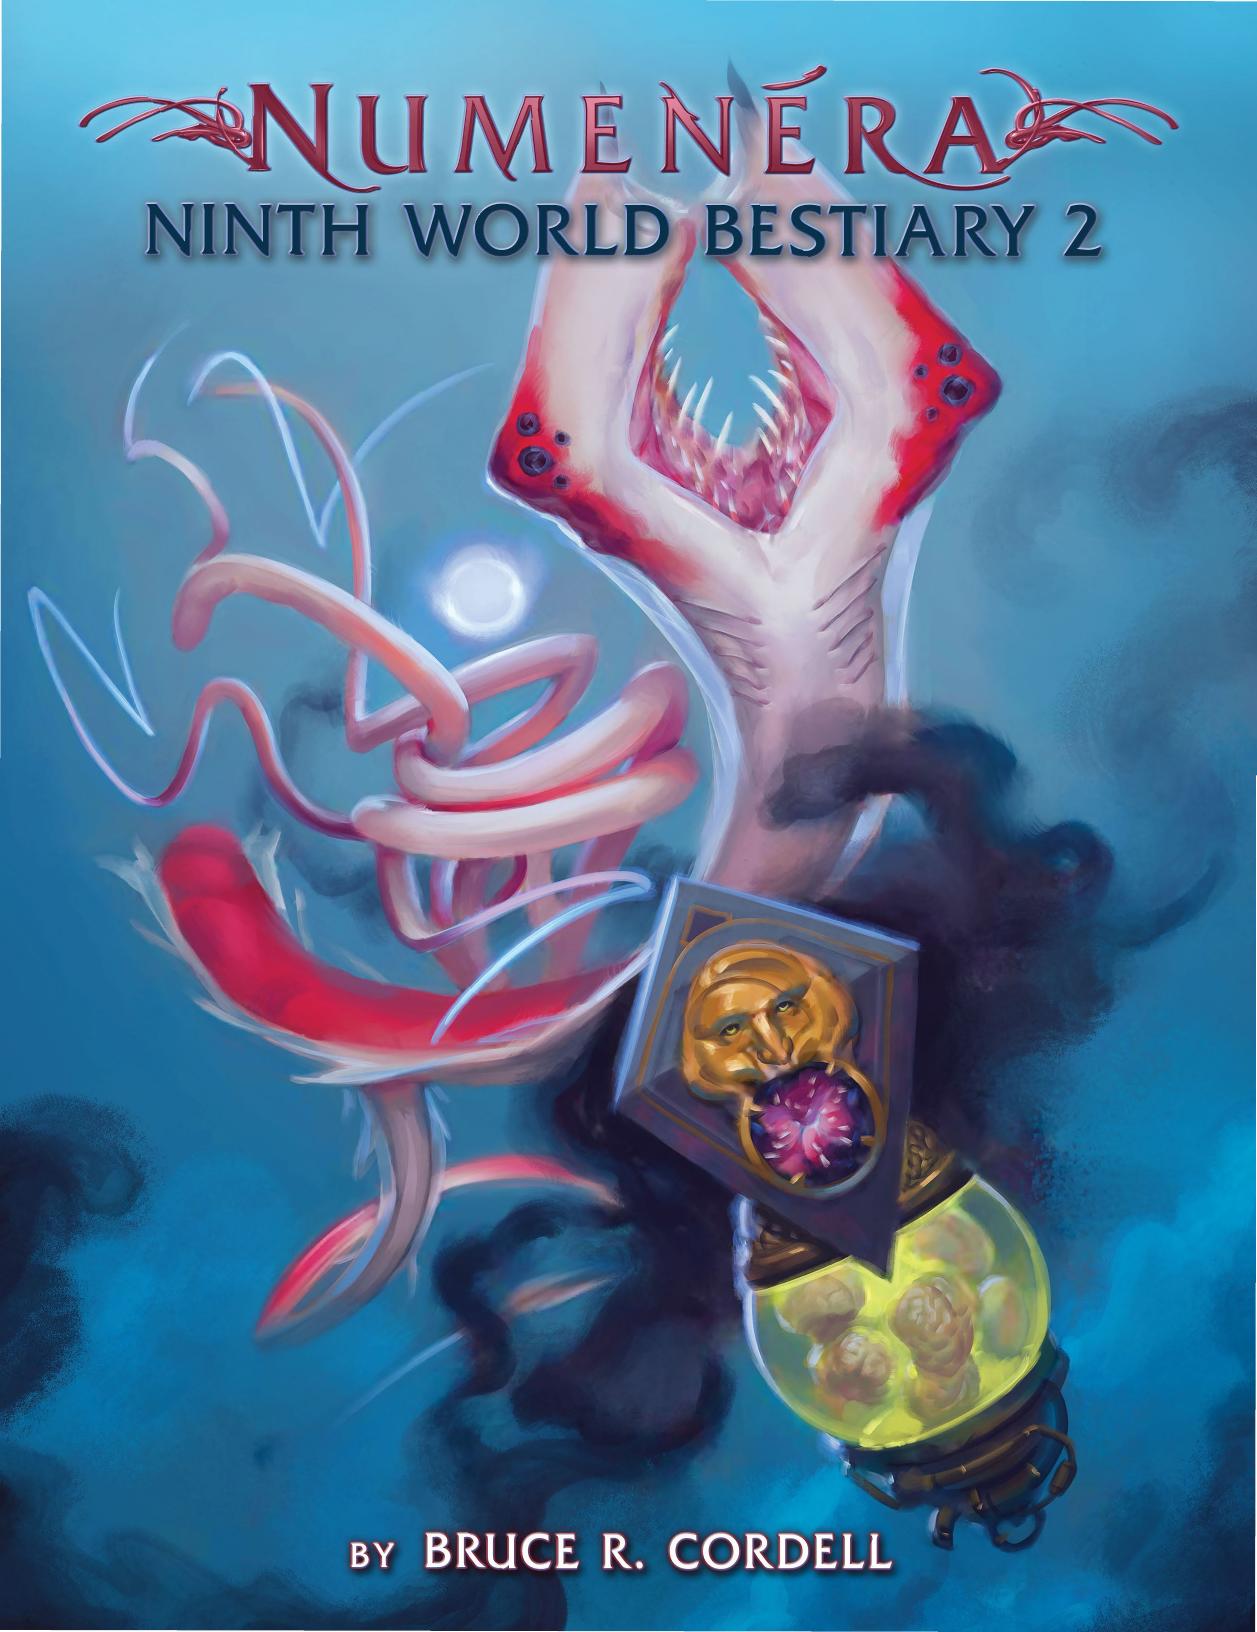 The Ninth World Bestiary 2